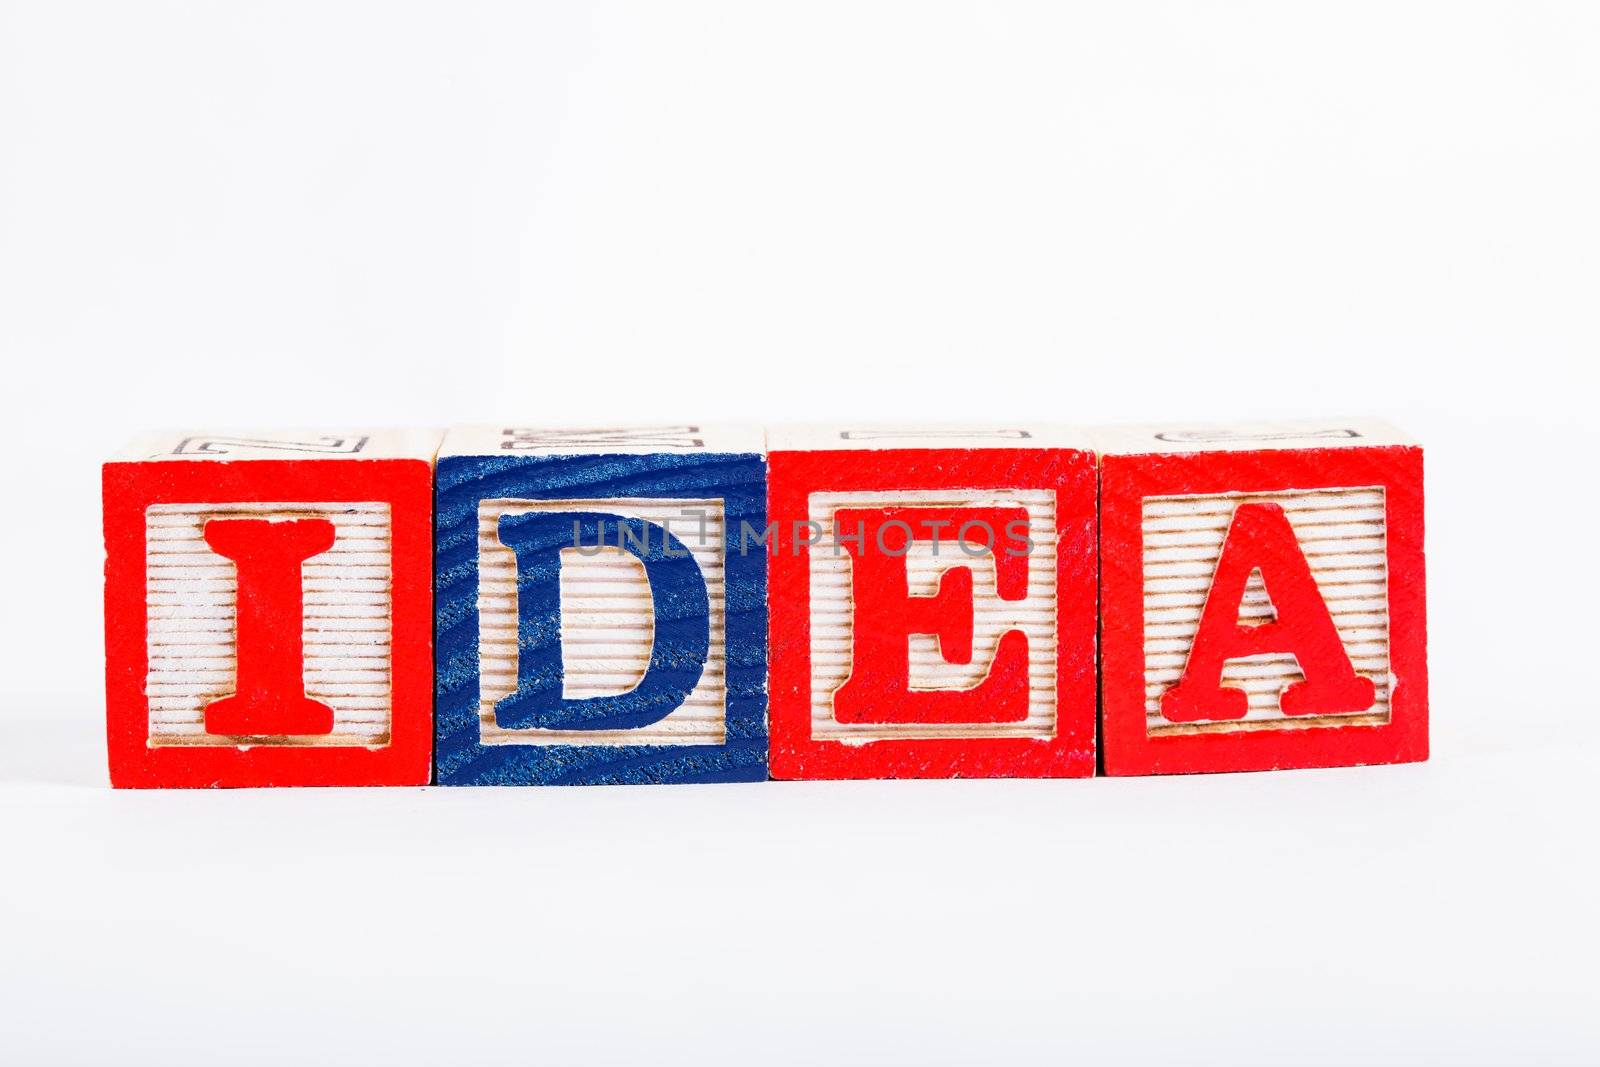 Word "idea" made from alphabet blocks on white